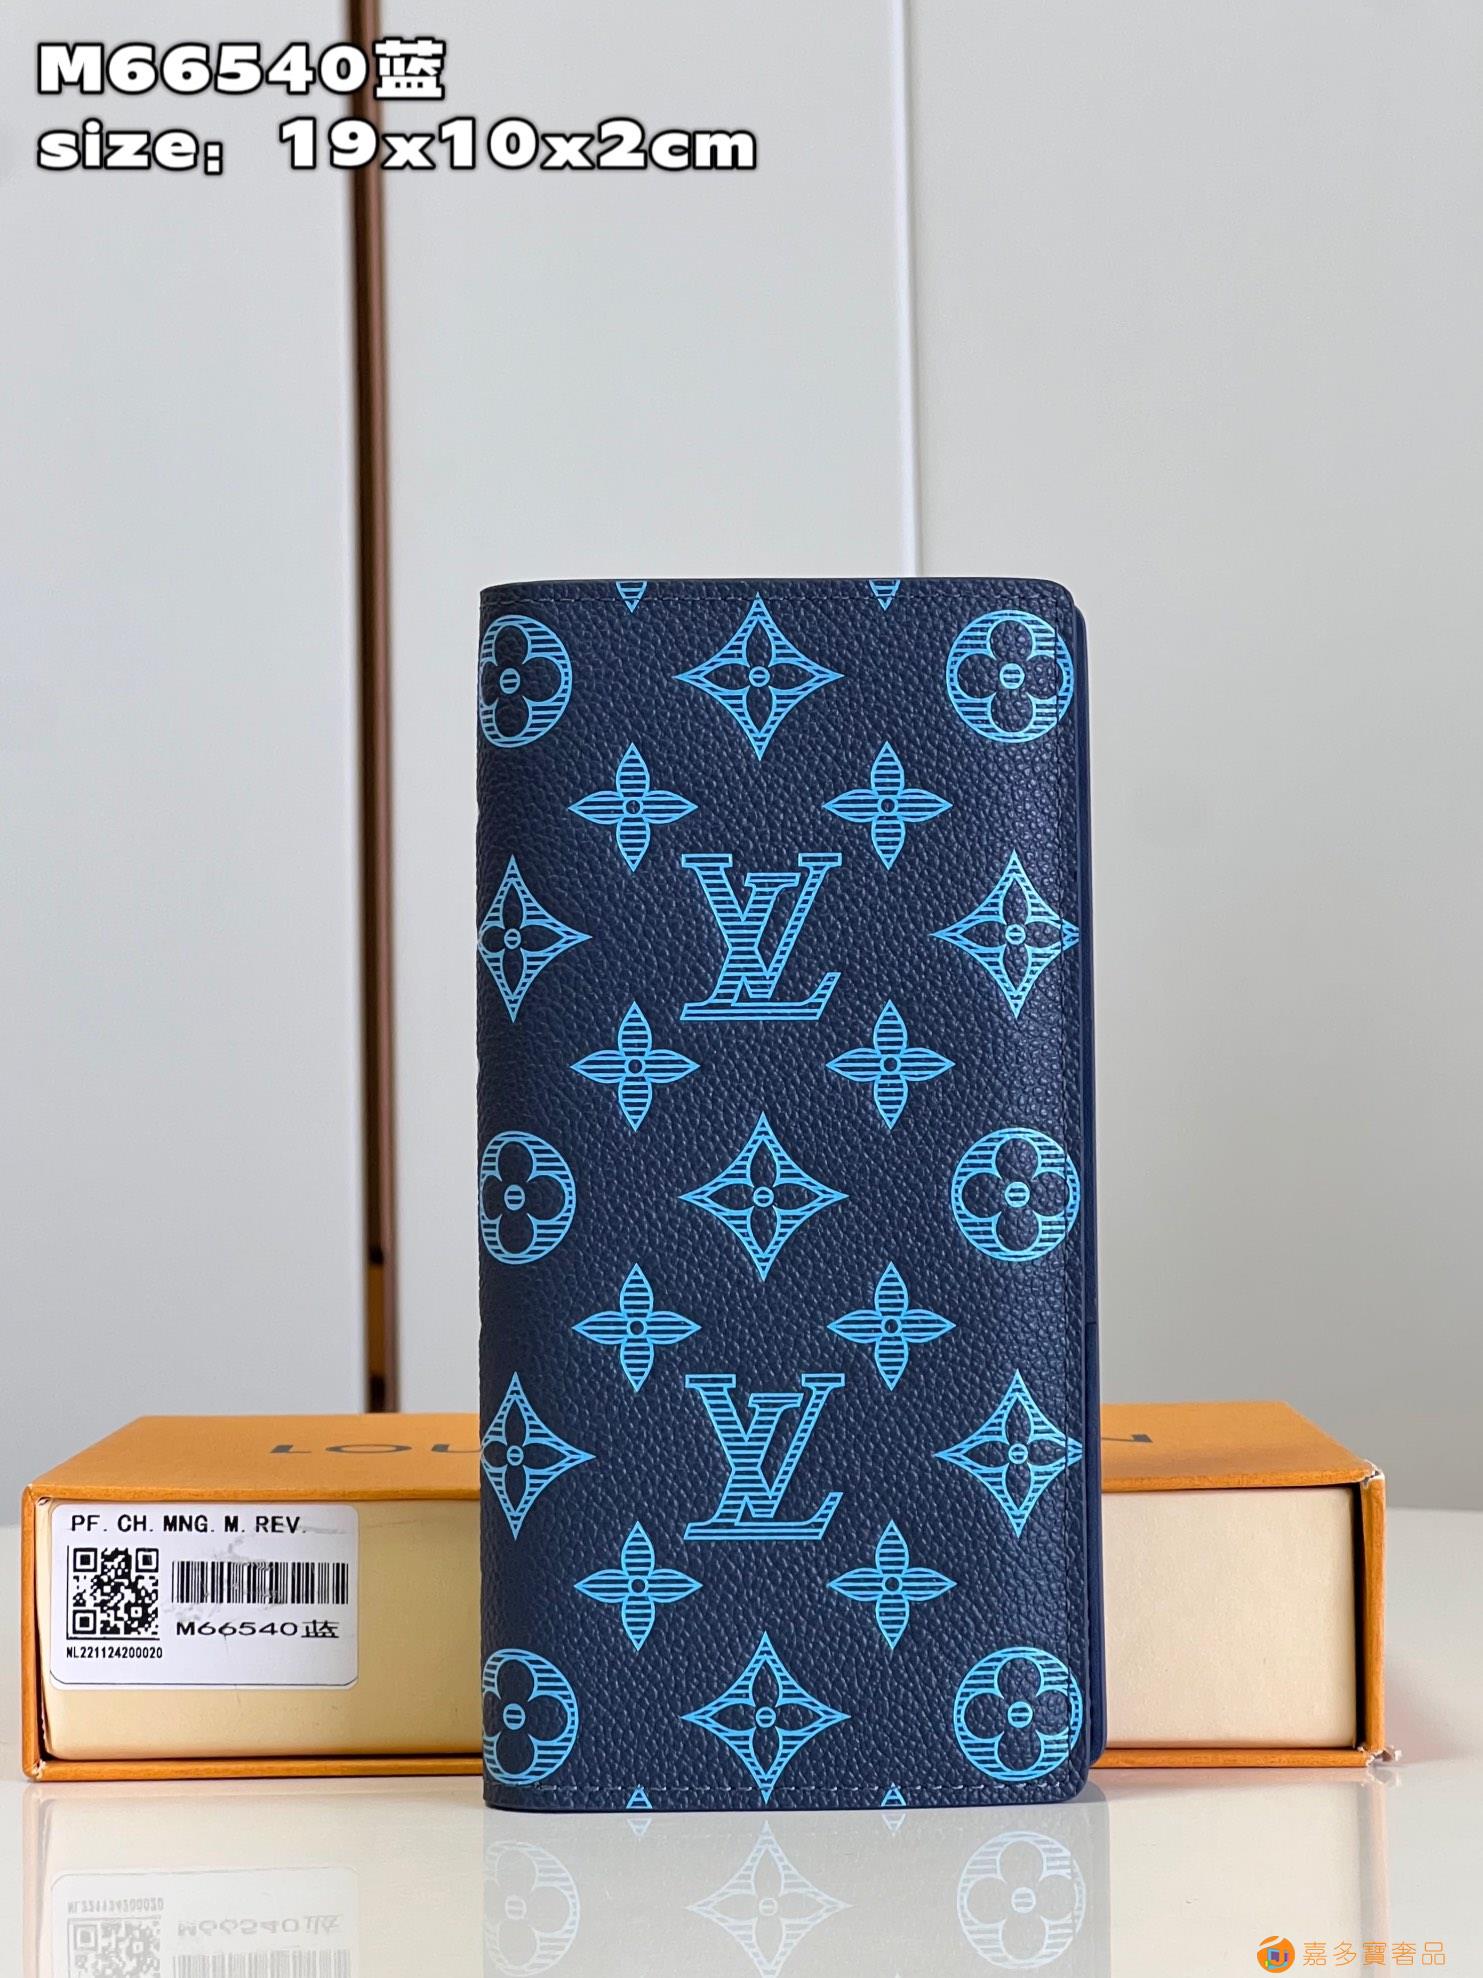 Georges Vuitton 年绘制的 Monogram